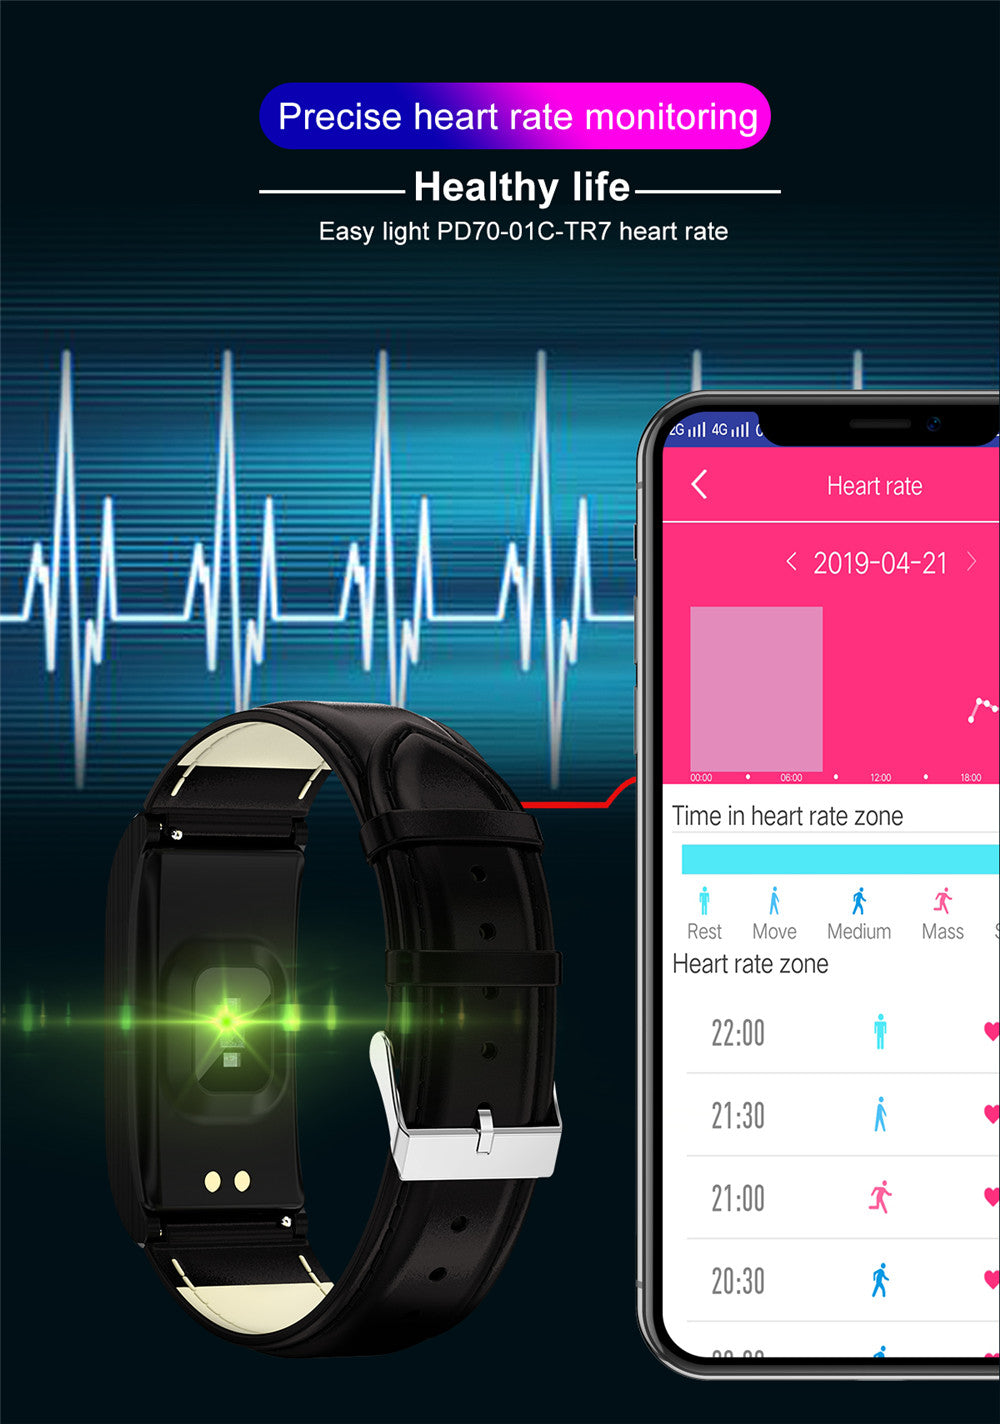 Greentiger AK12 Smart bracelet Men Women IP68 Waterproof Blood Pressure menstrual cycle monitor Fitness Tracker Smart band